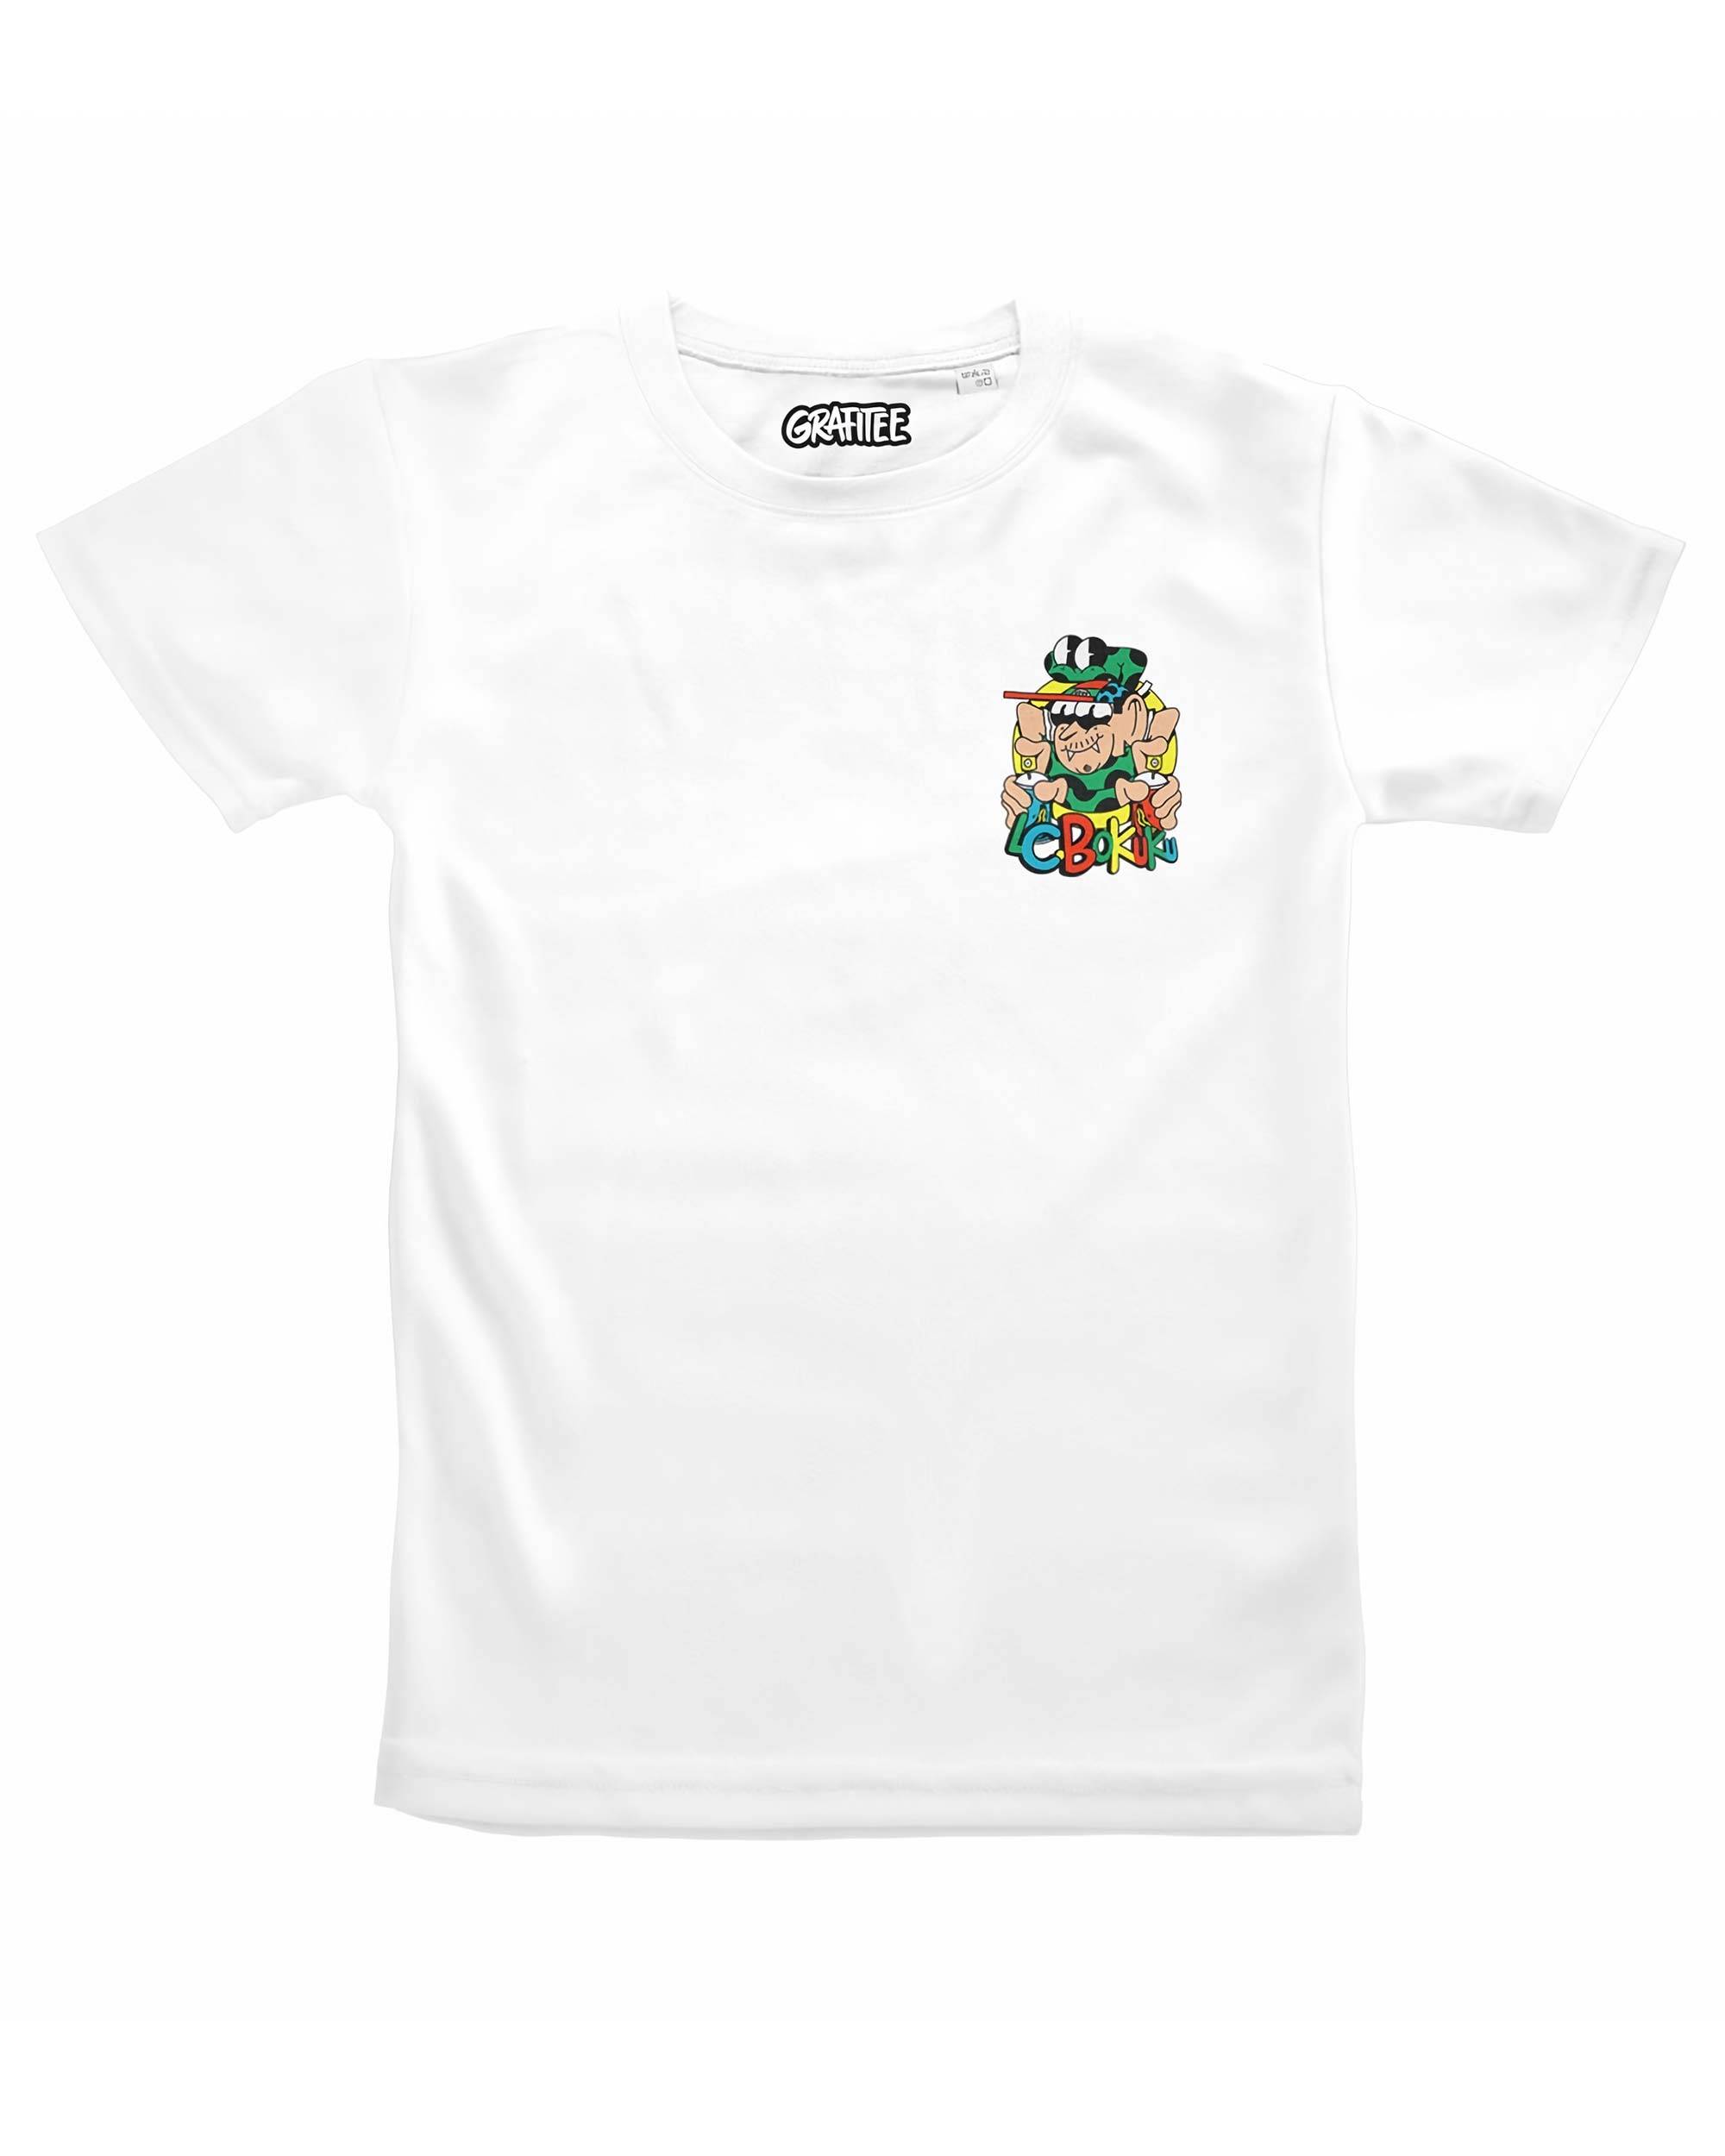 T-shirt LC Bokuku de couleur Blanc par BOKU